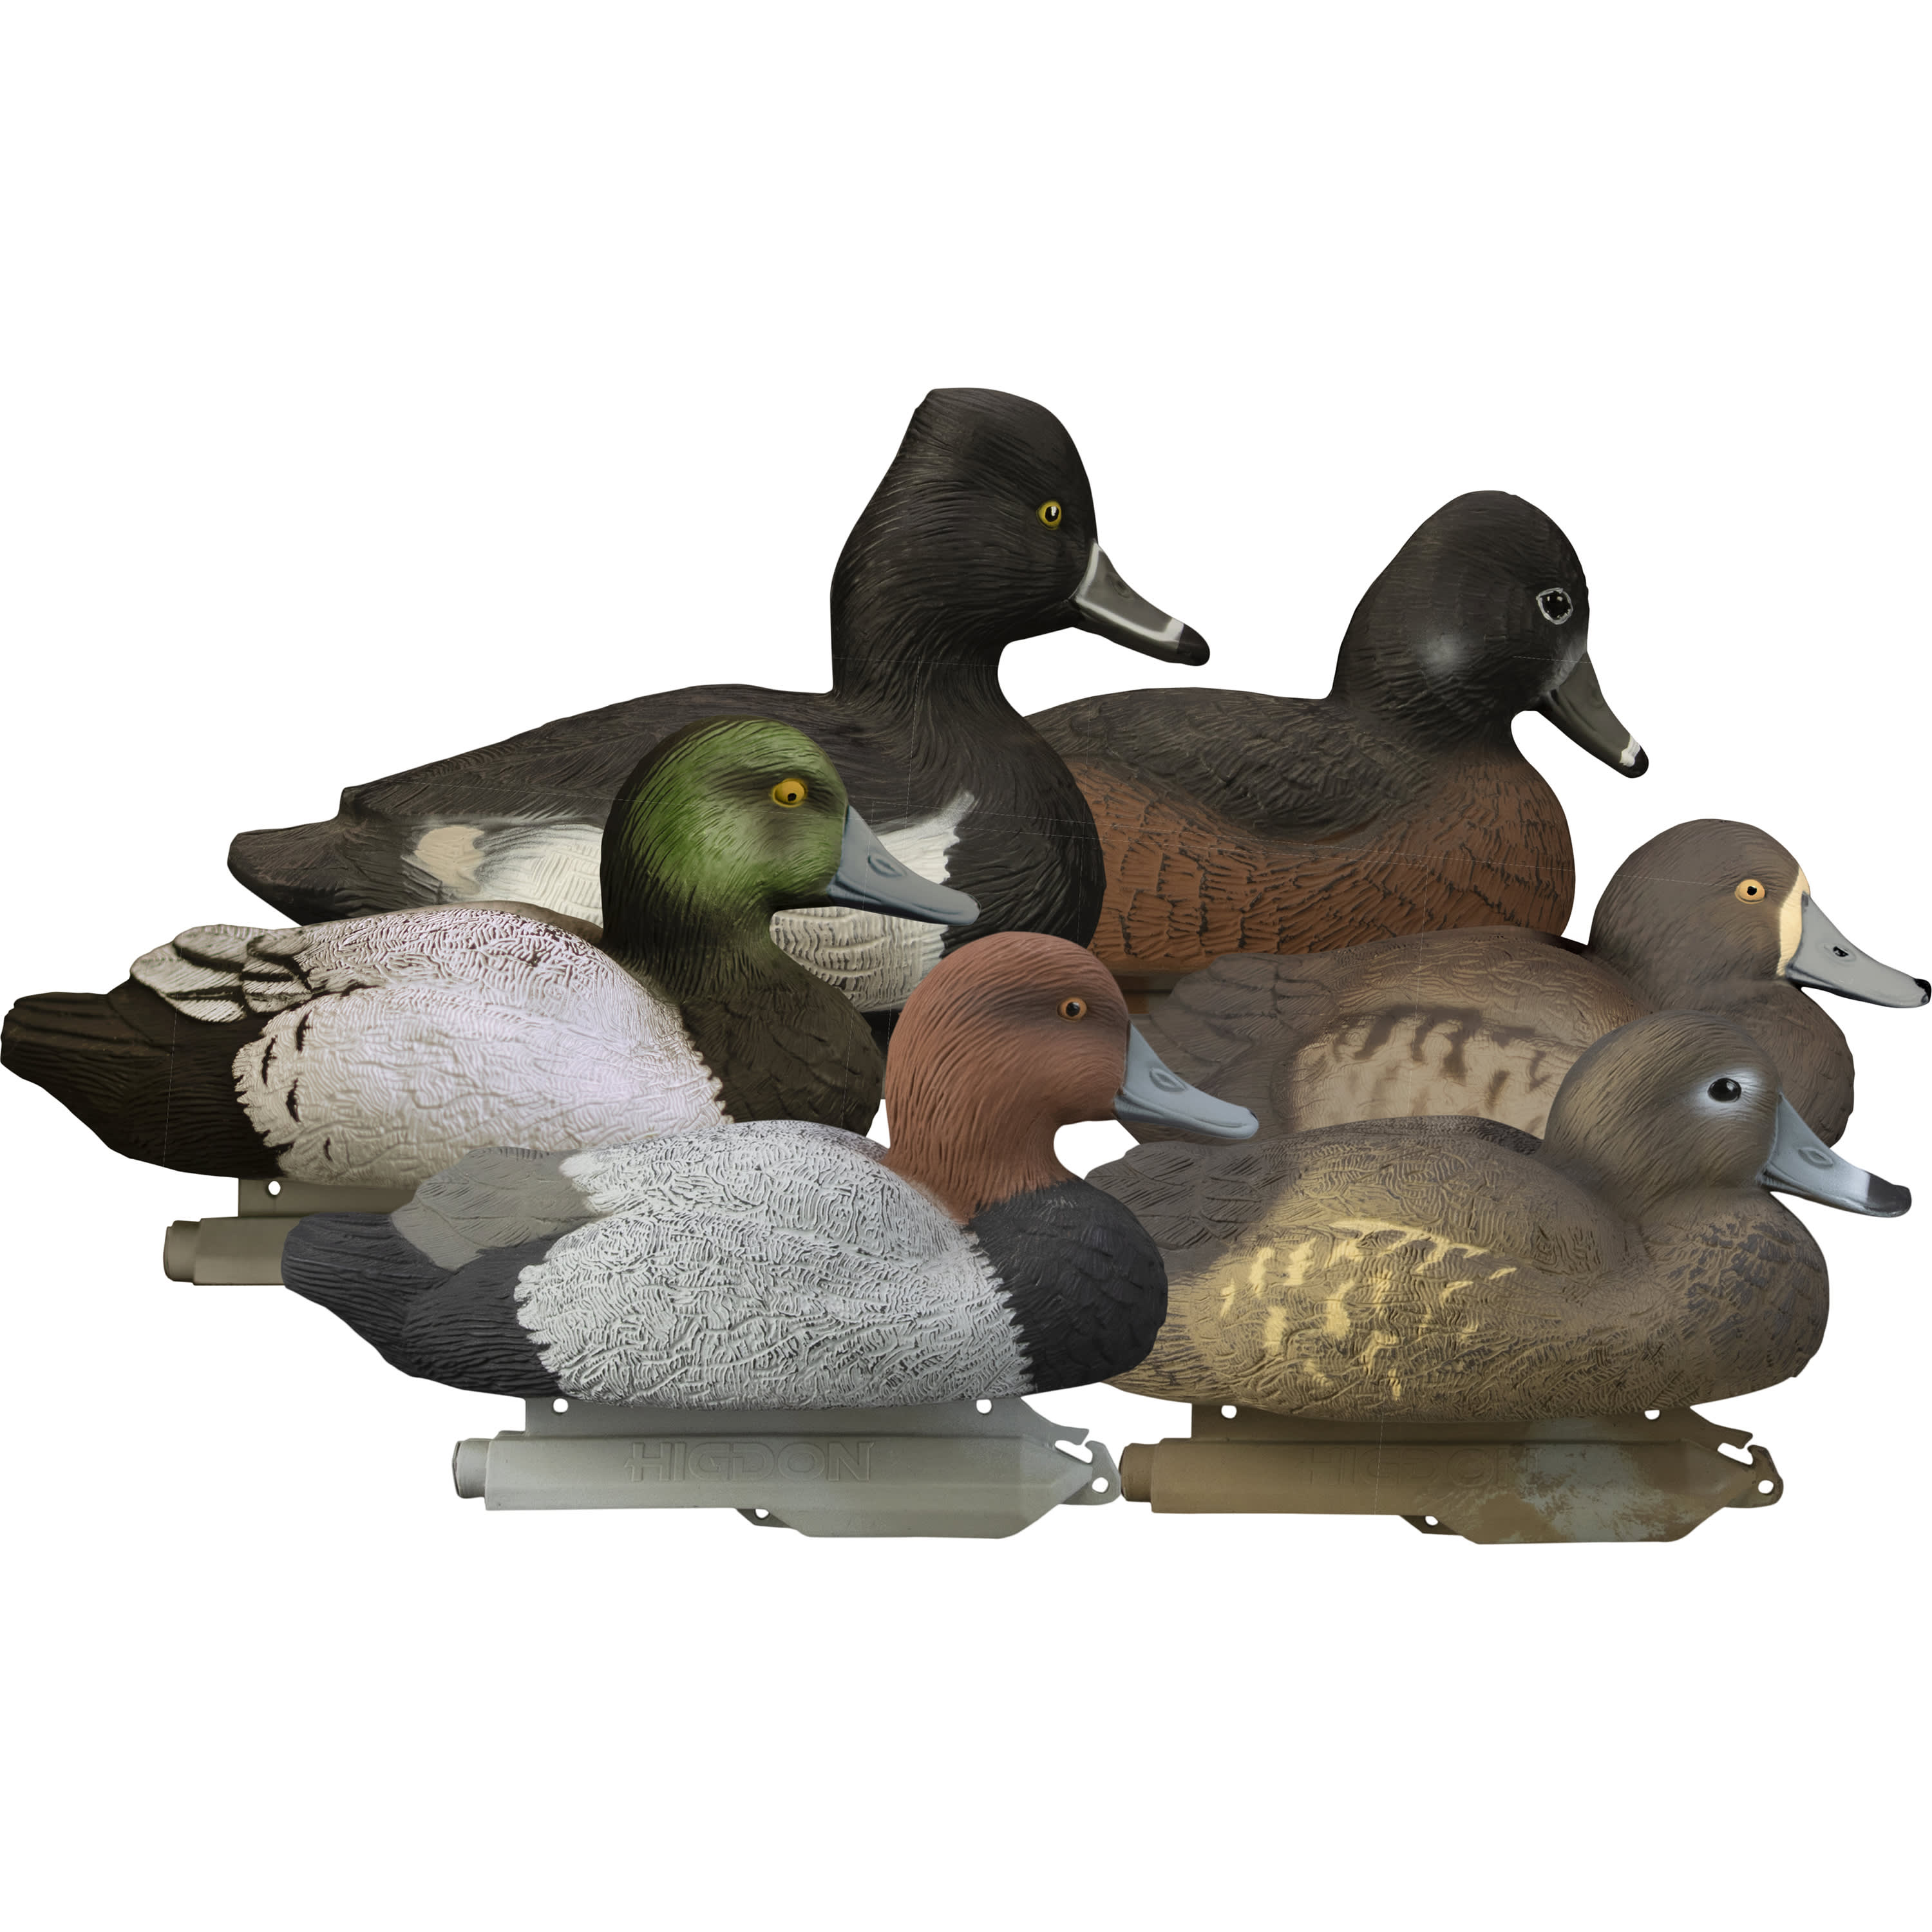 VULPO 100X75cm Outdoor Durable Hunting Duck Goose Turkey Decoy Bag